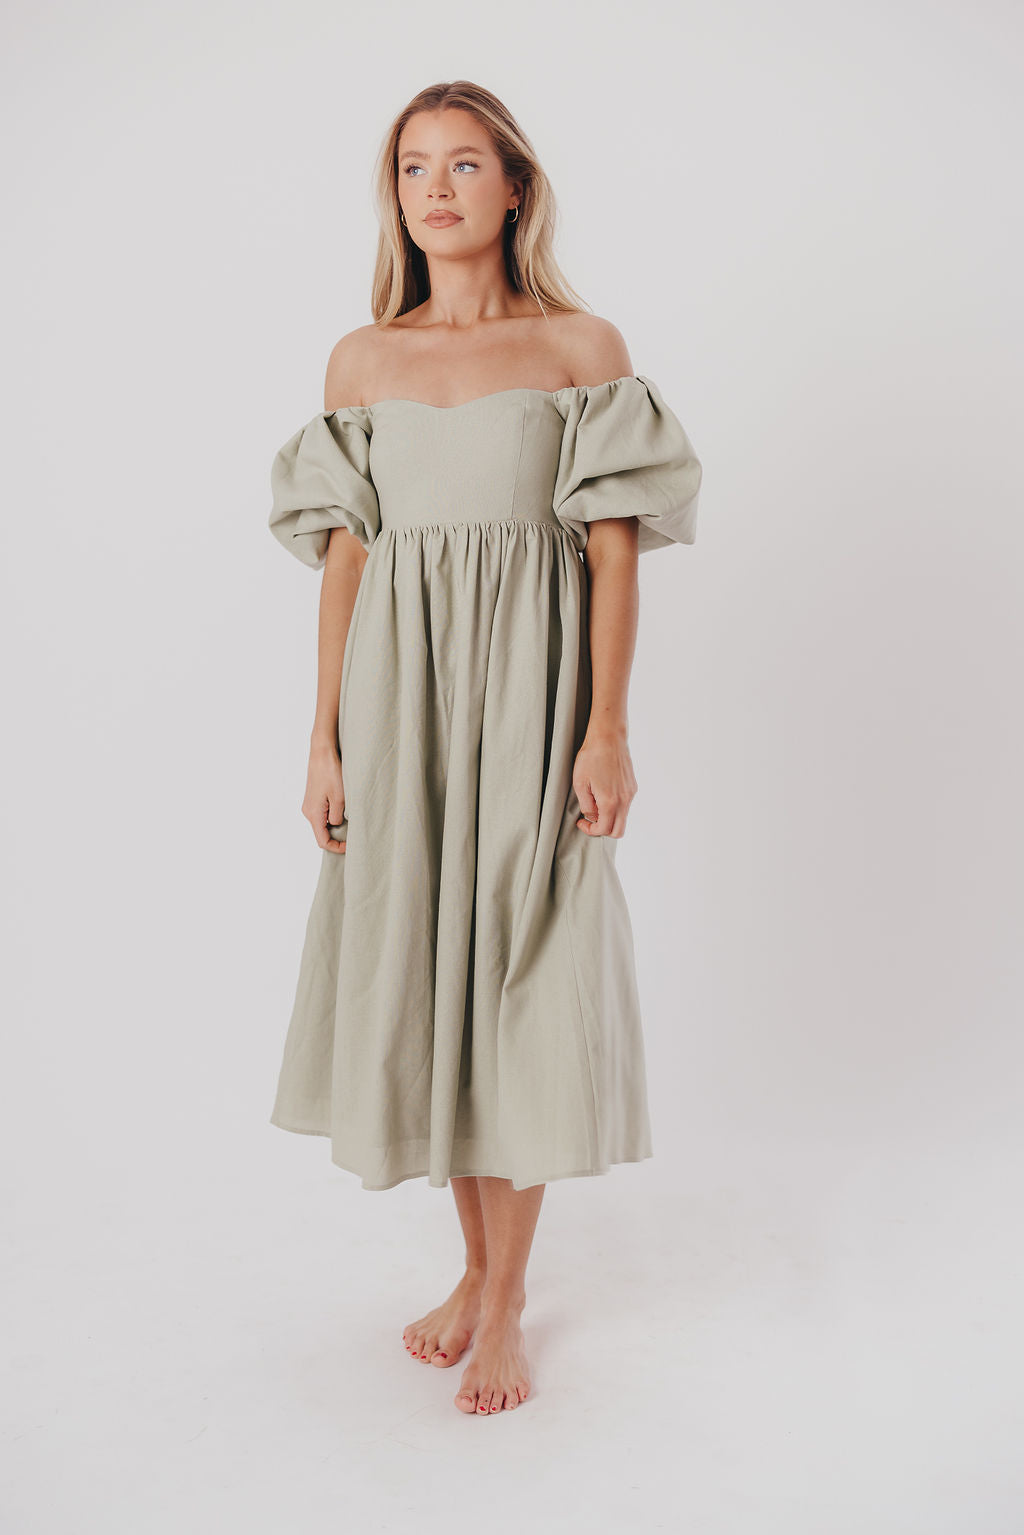 Hamilton Midi Dress in Olive - Bump Friendly (S-XL)